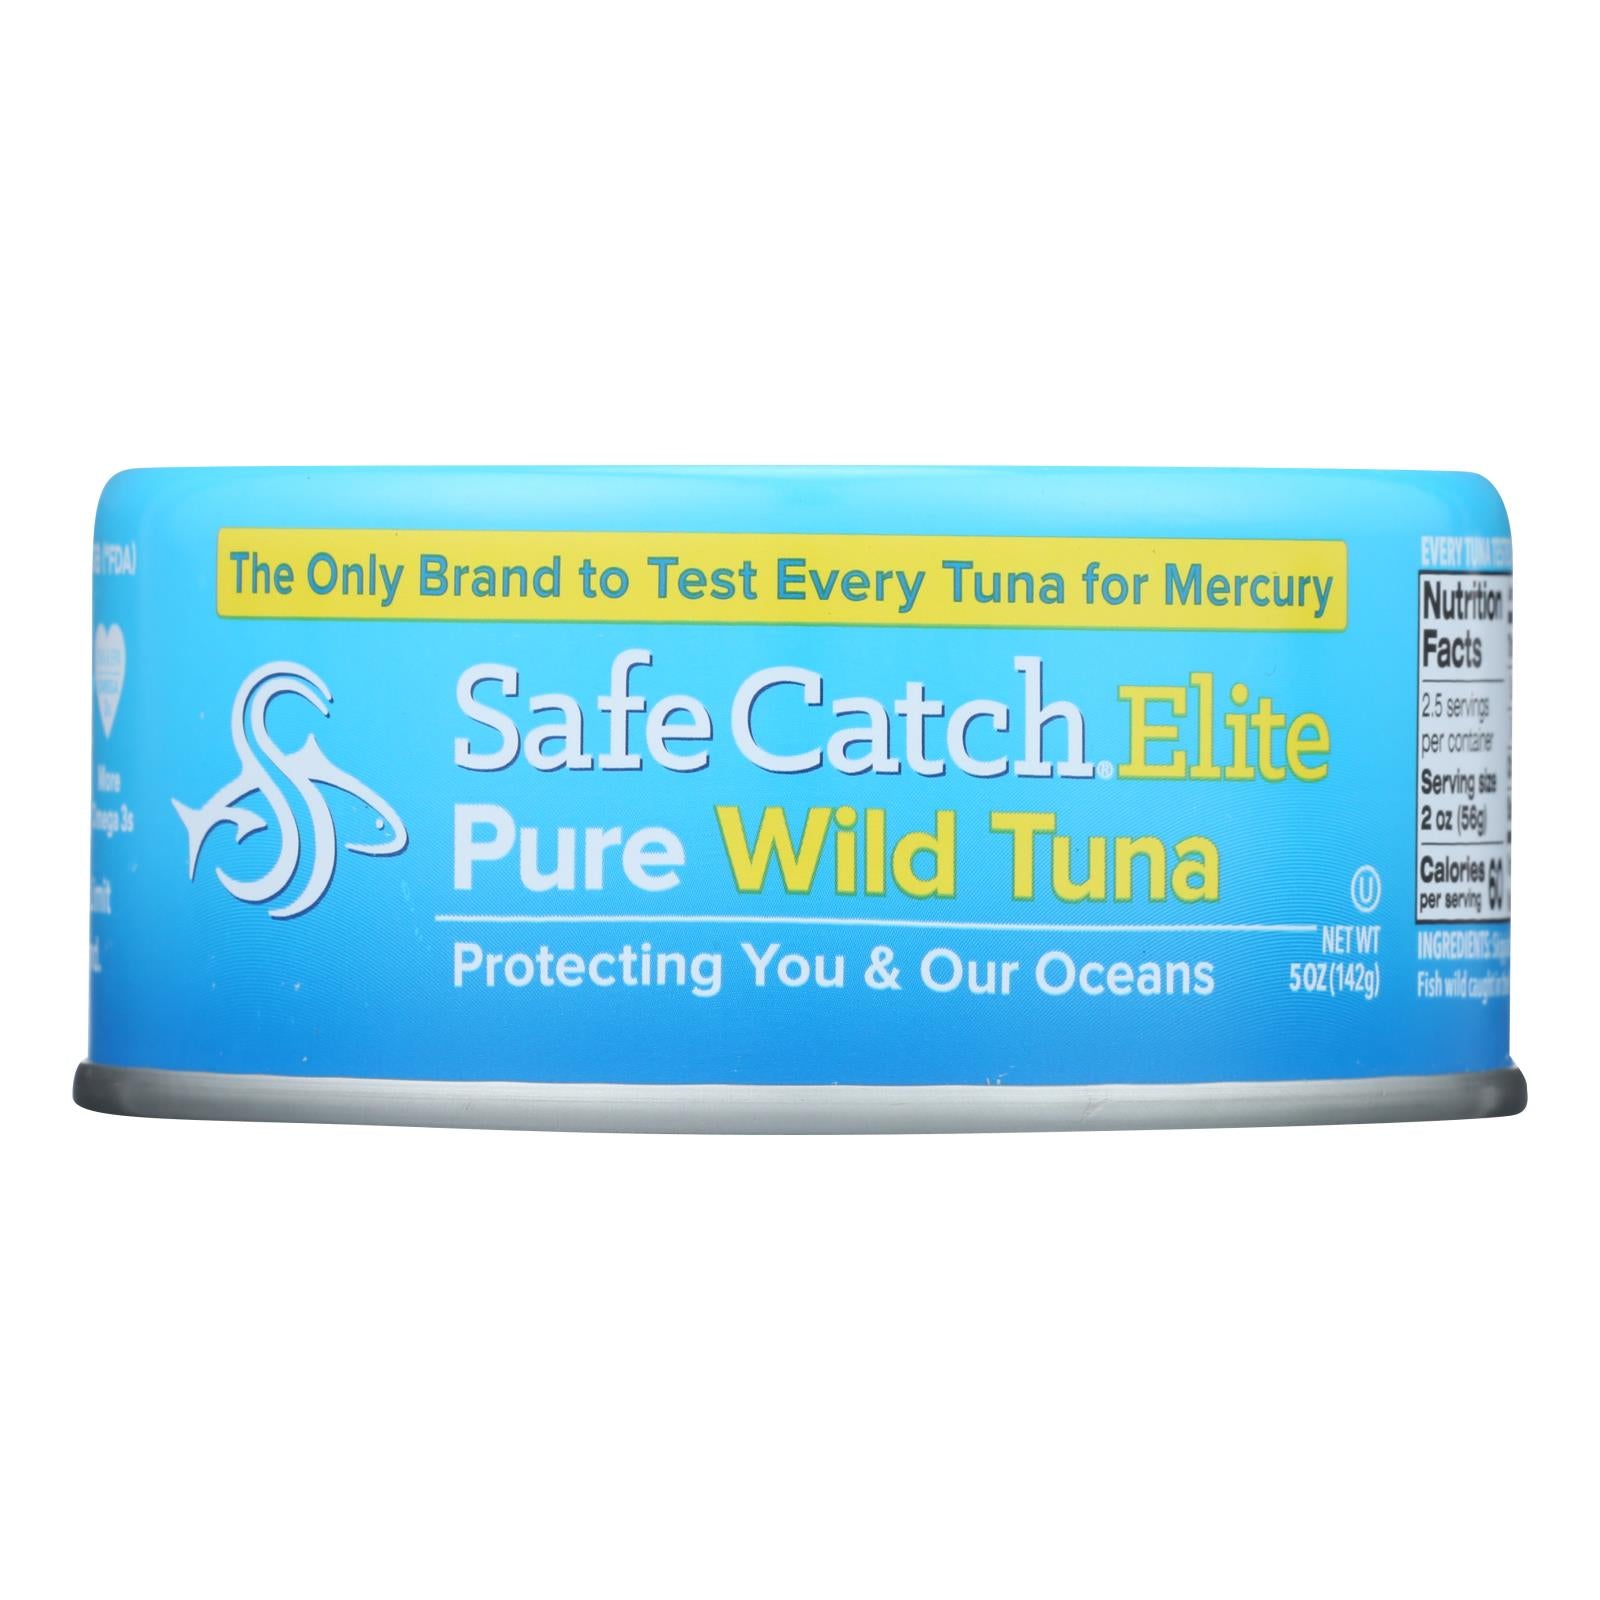 Safe Catch Ahi Wild Yellowfin Tuna 5 Oz-6 Count